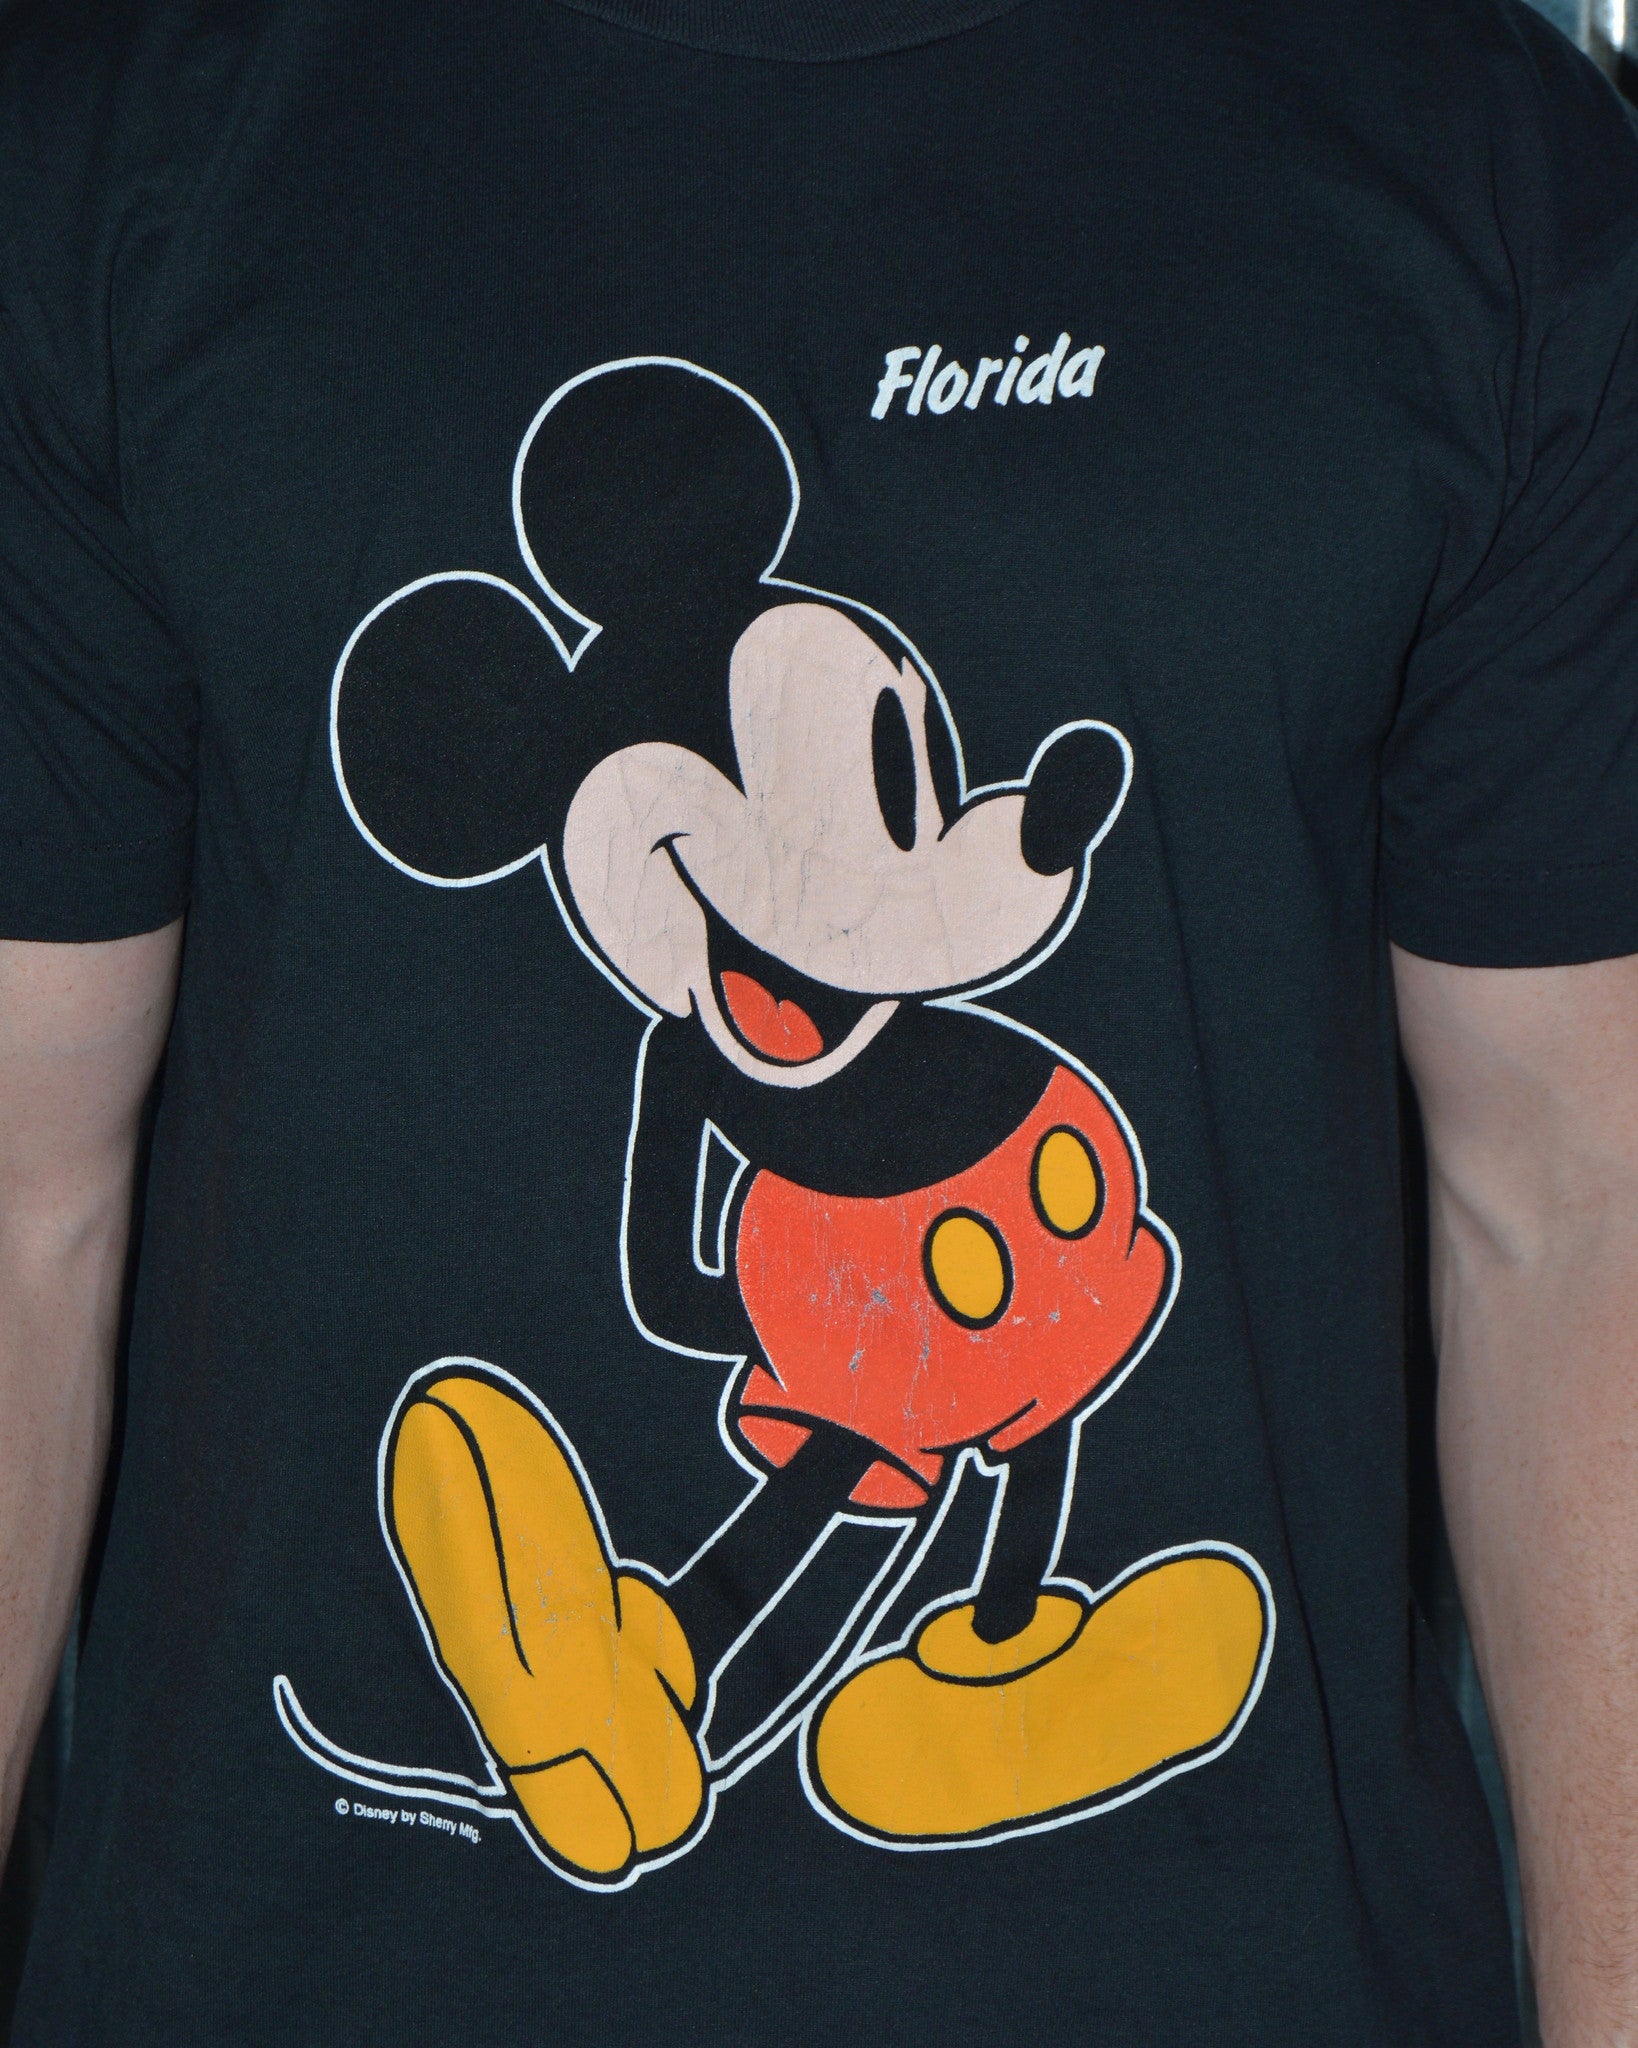 Tommy Hilfiger Florida T-shirt